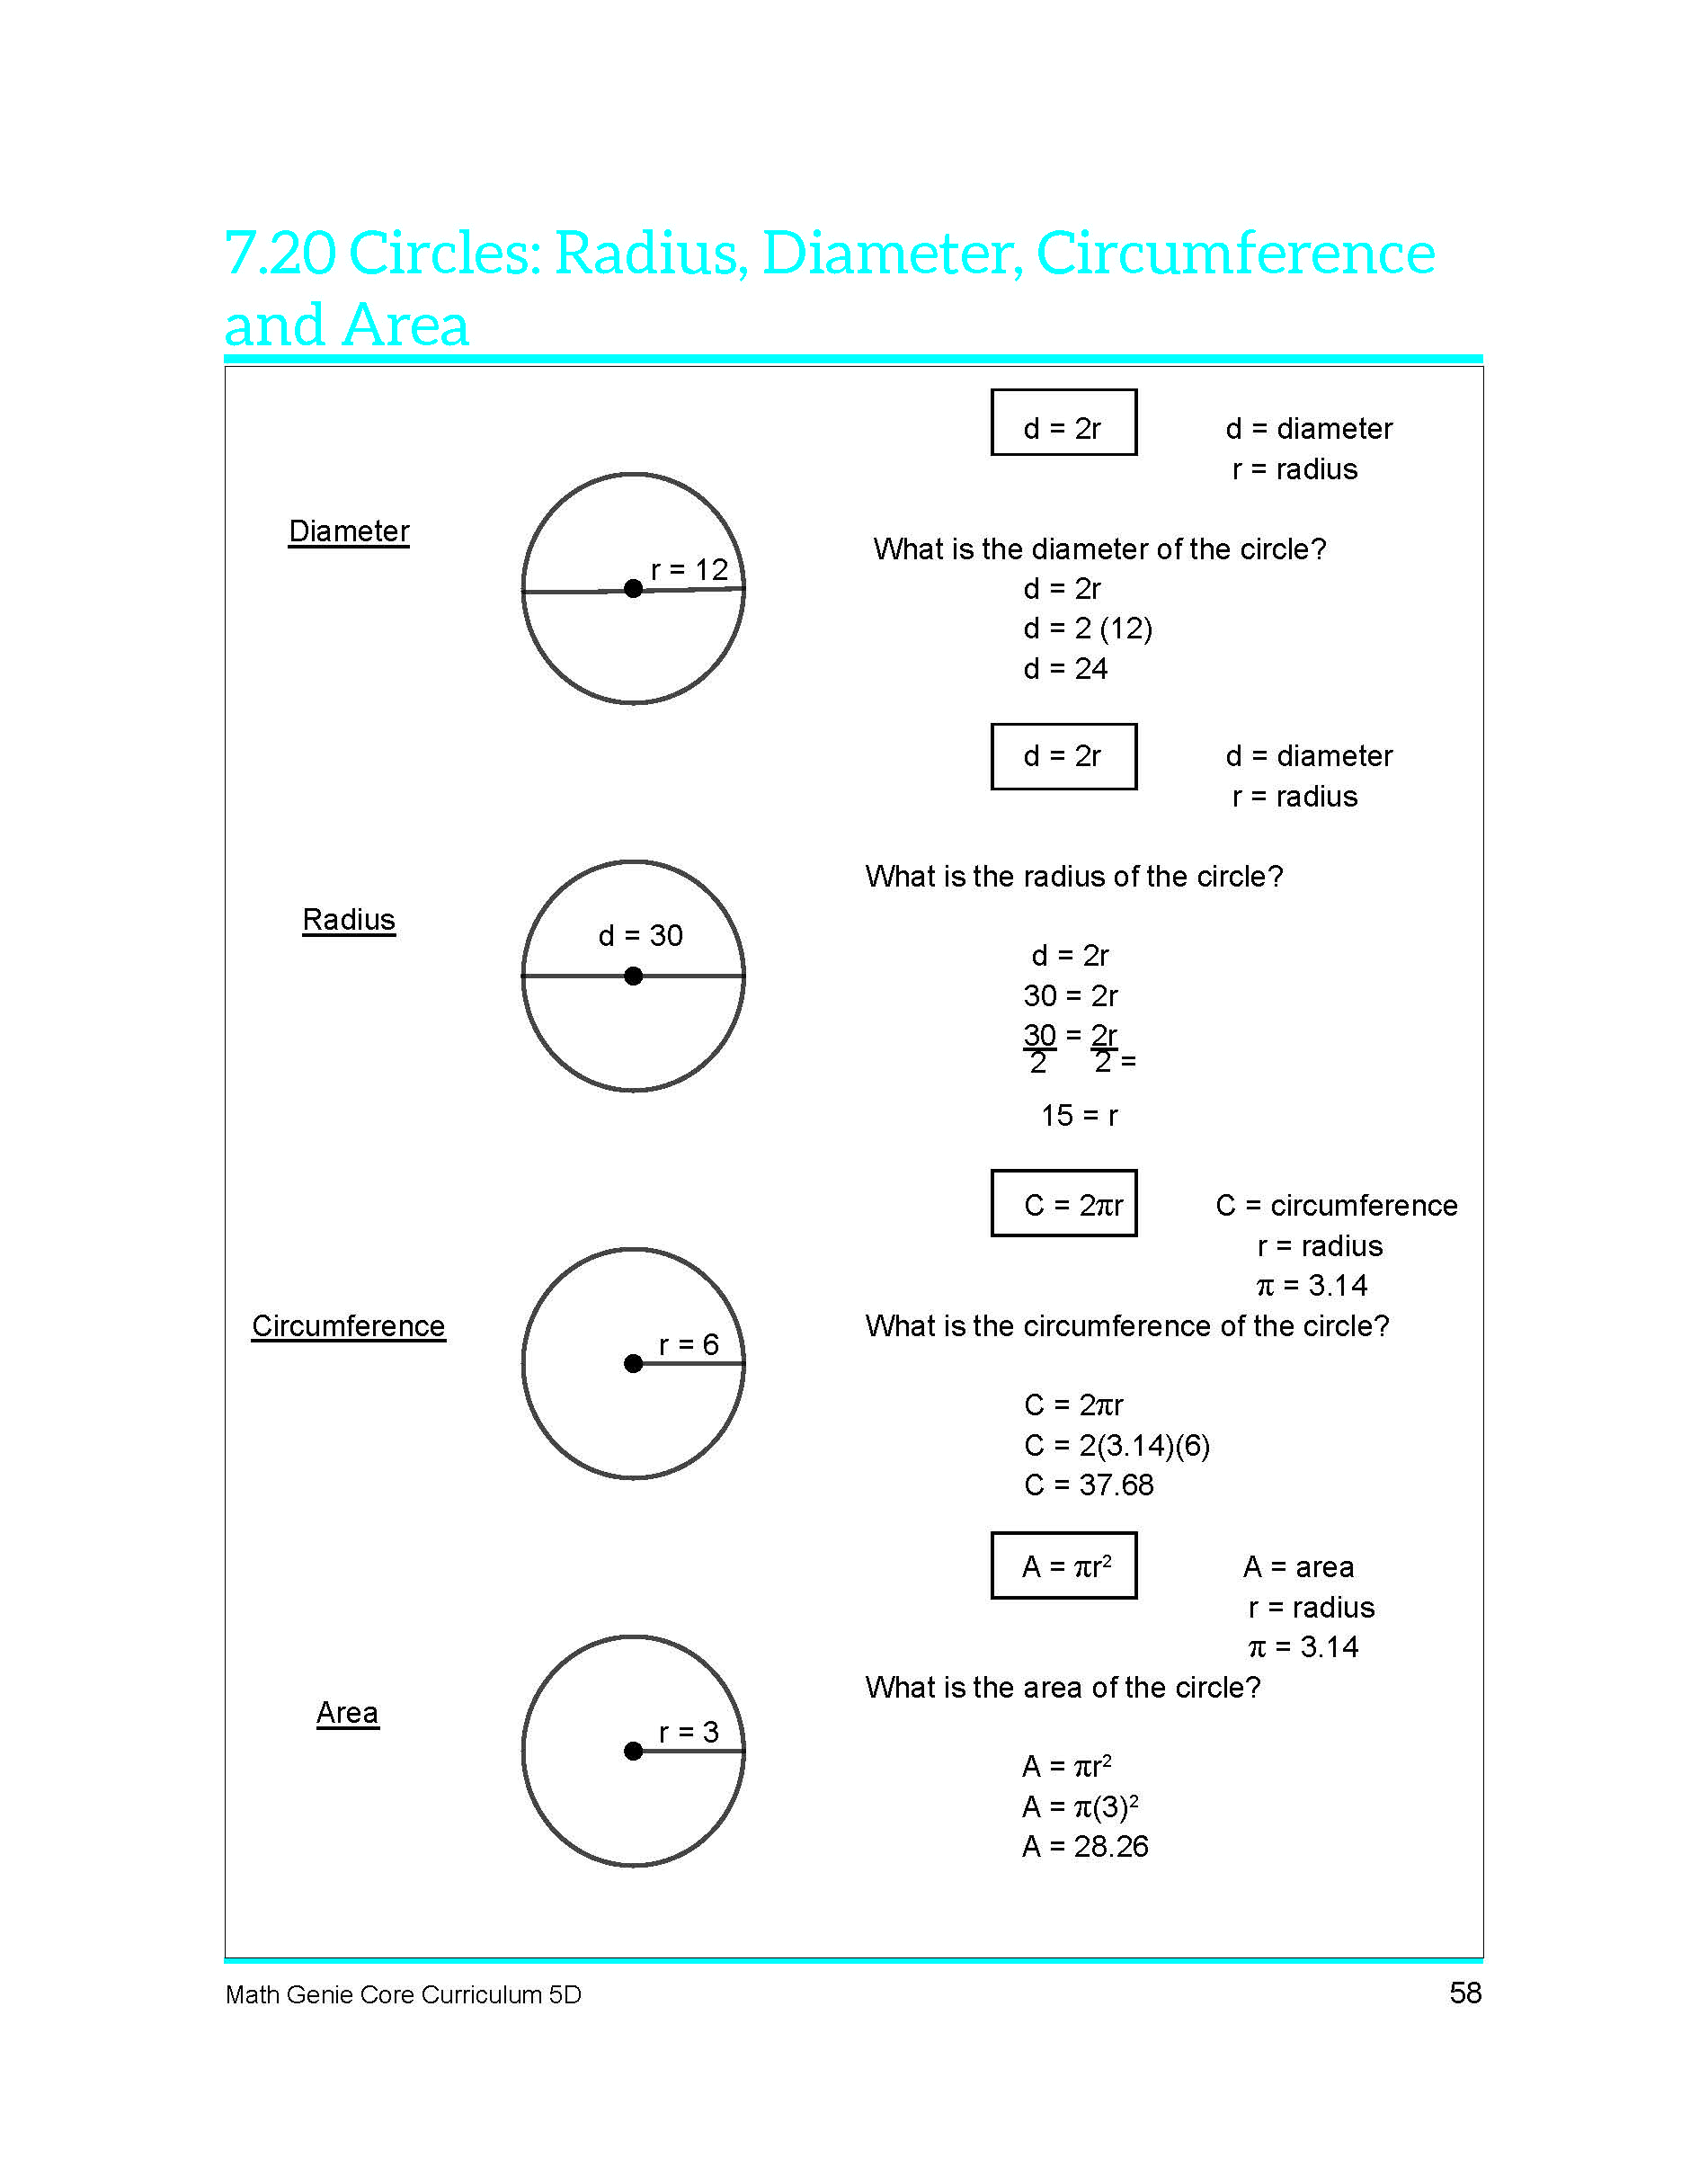 Grade-5-Circles-Radius-Diameter-Circumference-Area.jpg